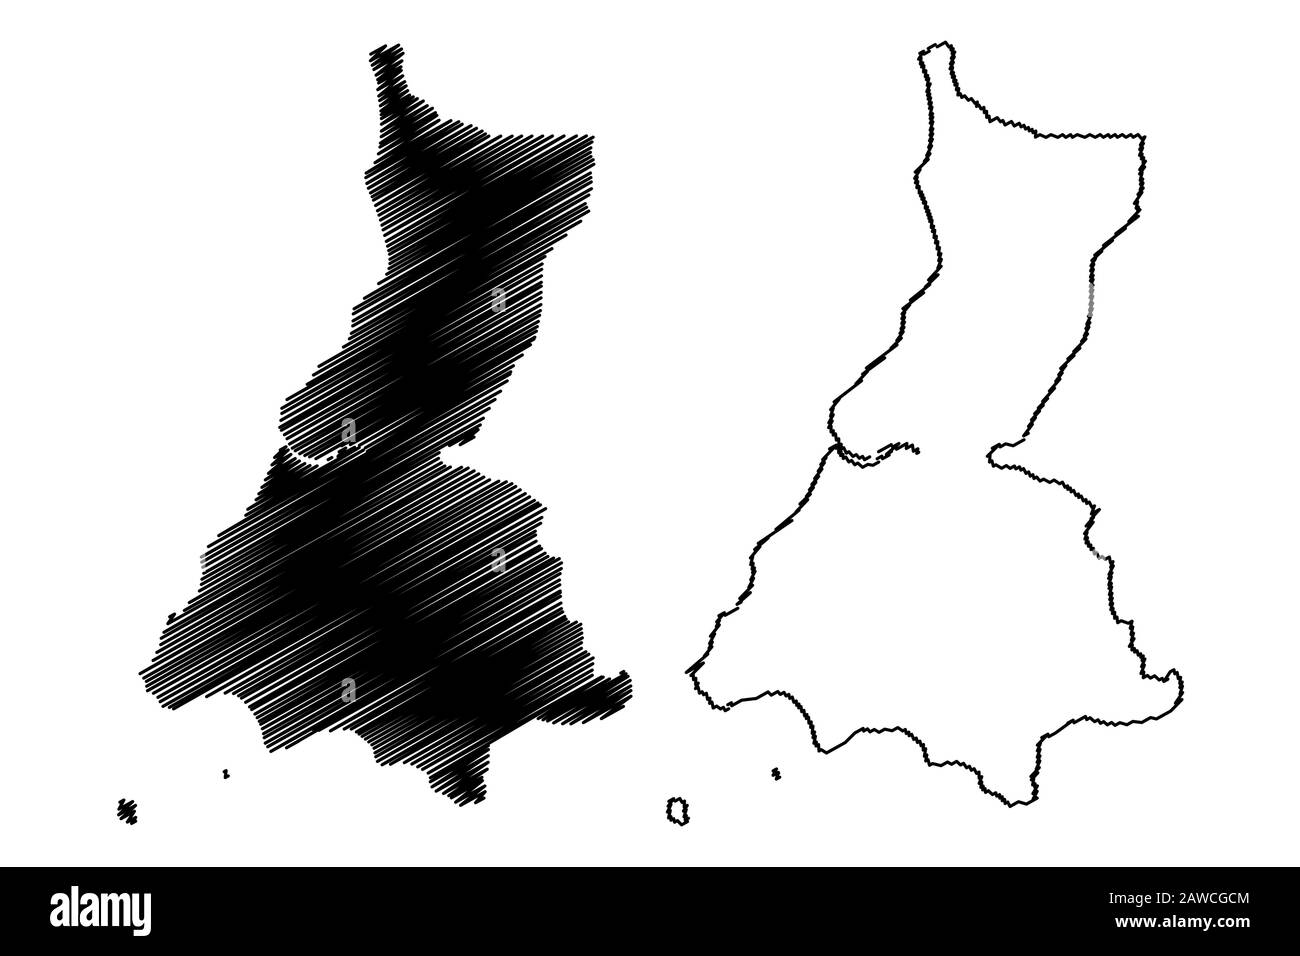 Litoral (Republic of Equatorial Guinea, Provinces of Equatorial Guinea) map vector illustration, scribble sketch Litoral Province map Stock Vector